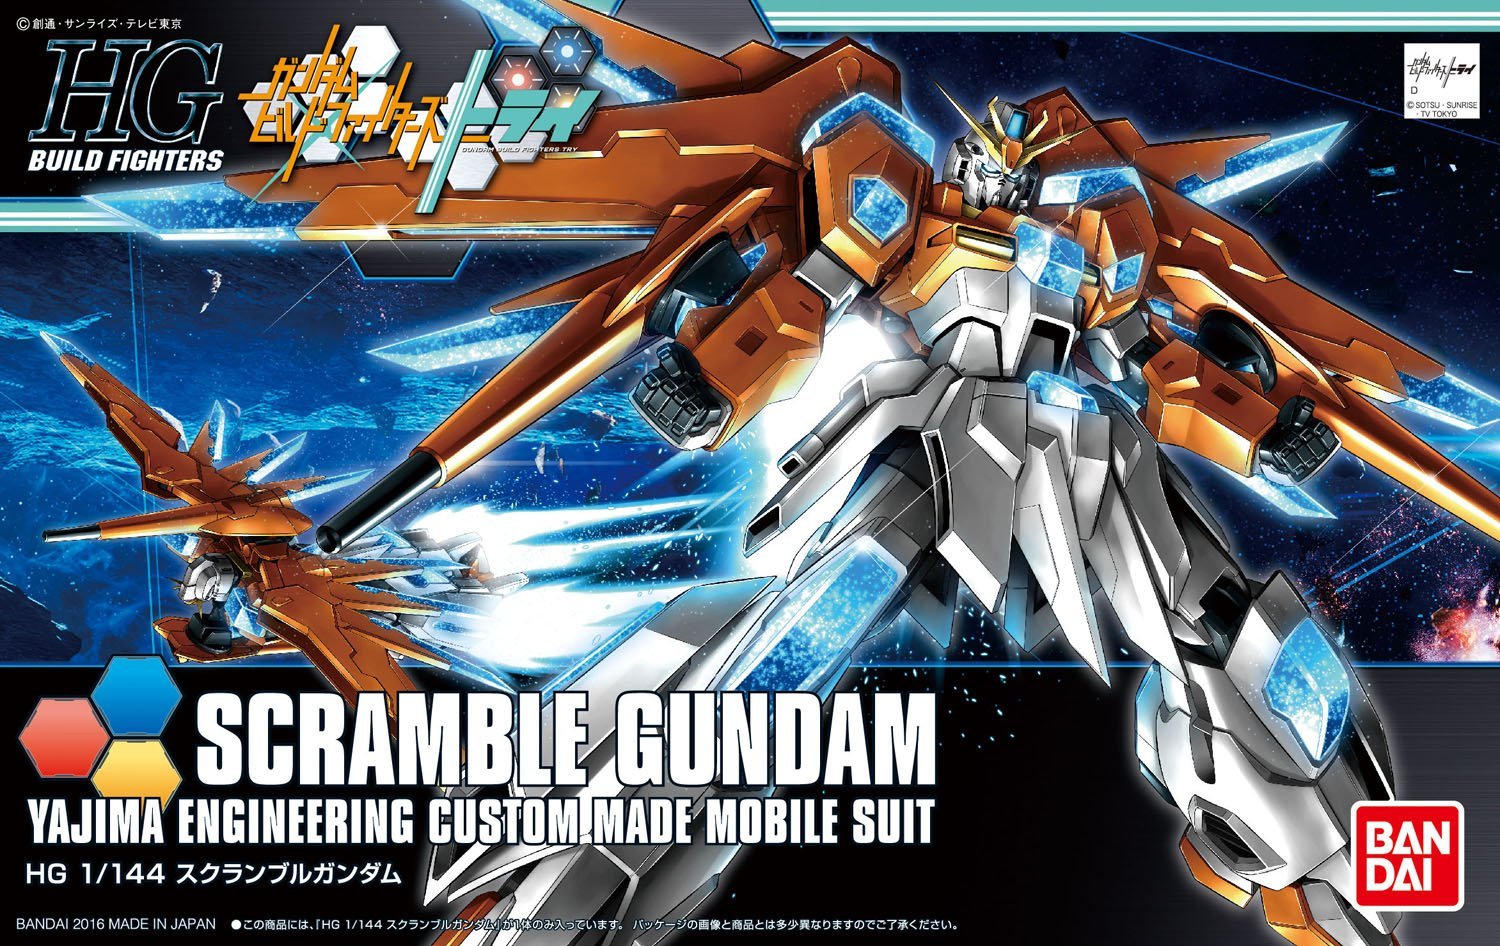 HG Scramble Gundam 1/144